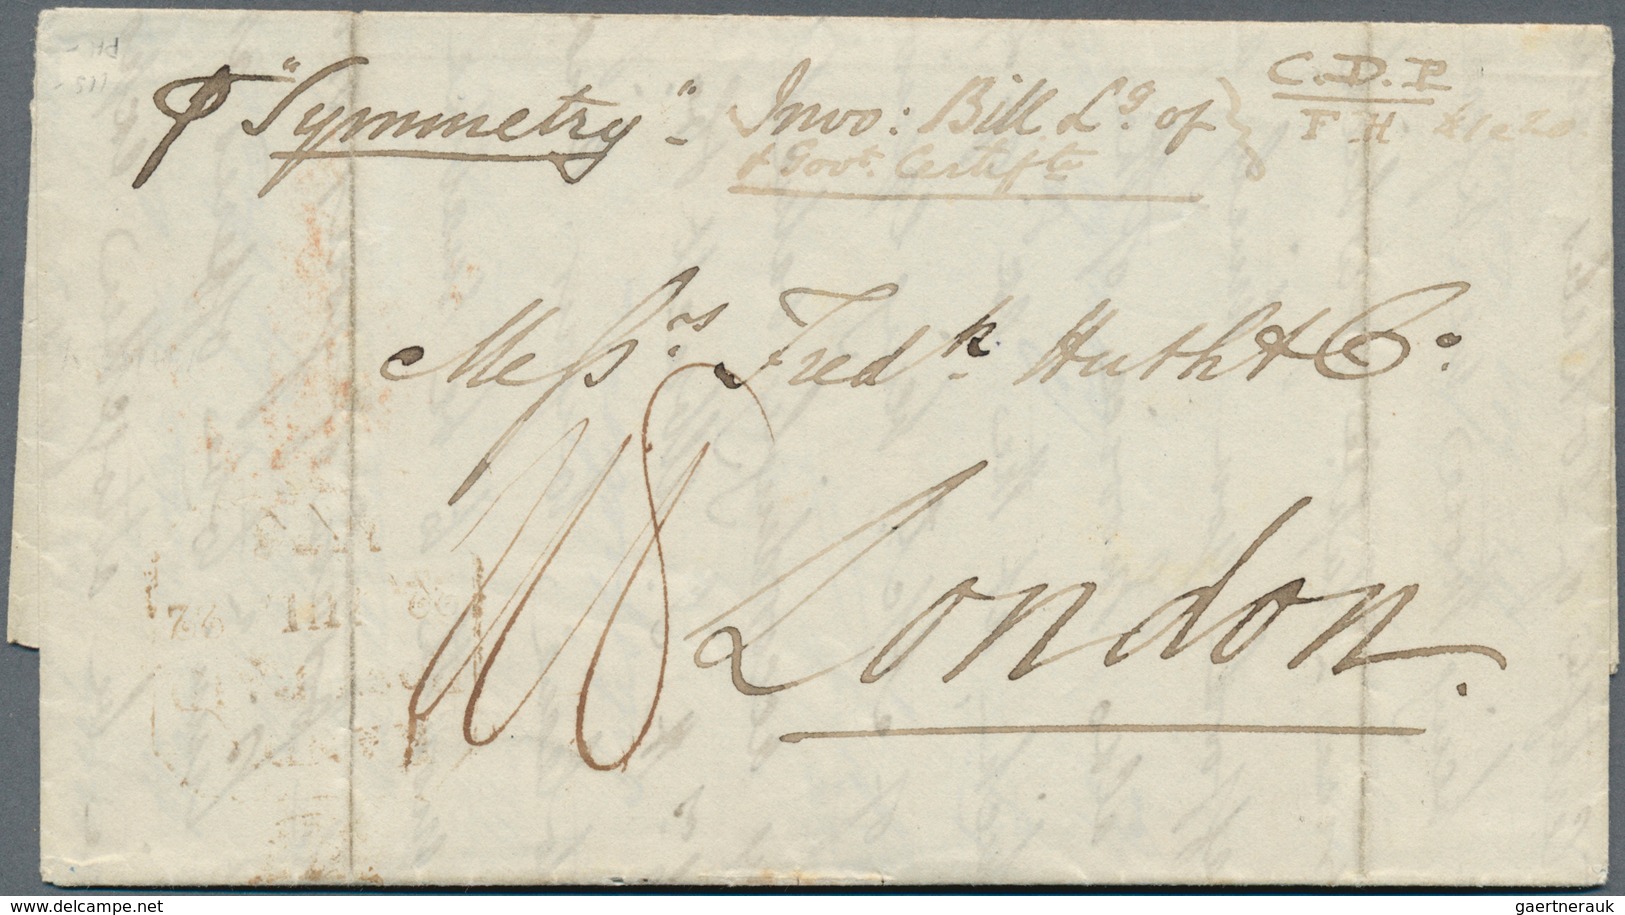 Indien - Vorphilatelie: 1836 (21 July): Entire Letter (Invoice Of Cinnamon Shipped By The "Symmetry" - ...-1852 Vorphilatelie